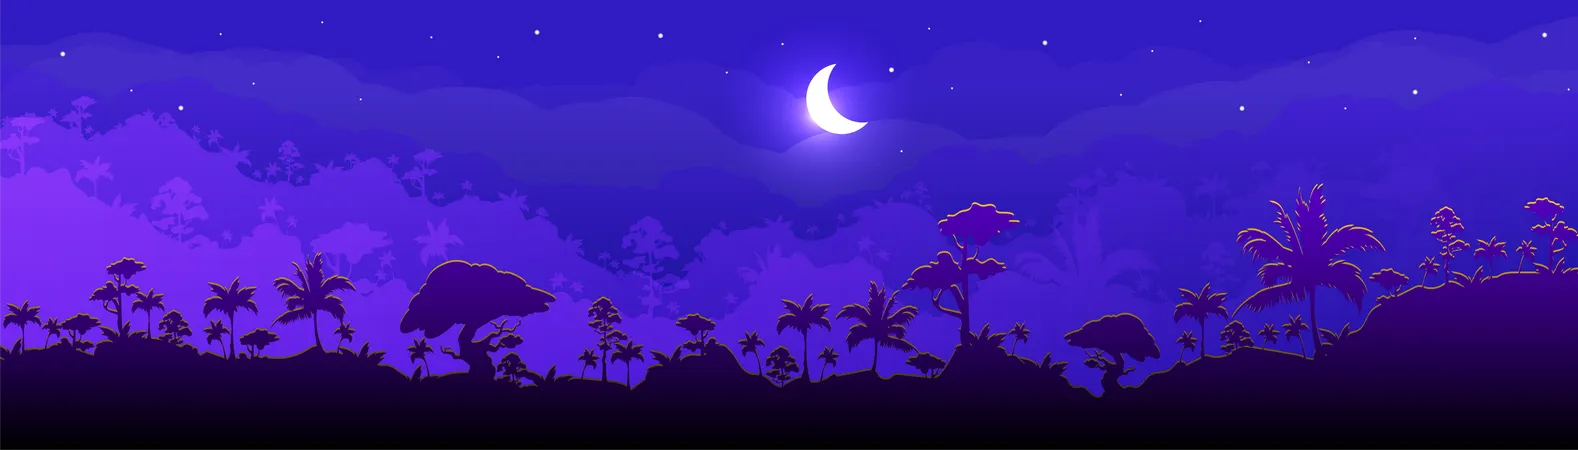 Night forest scenery in Jungle  Illustration